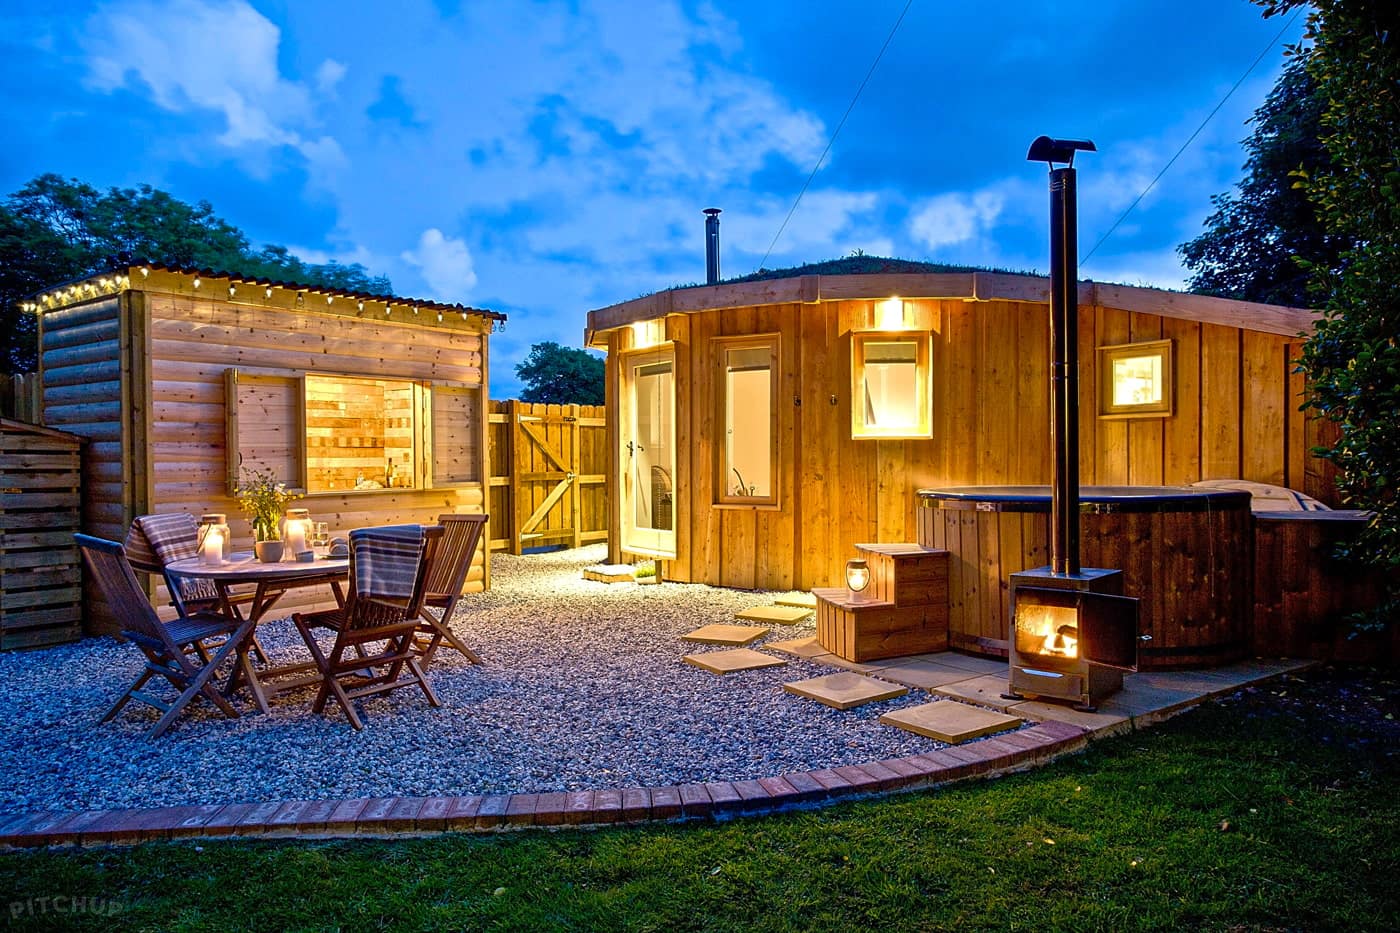 Yurt-shaped wooden cabin